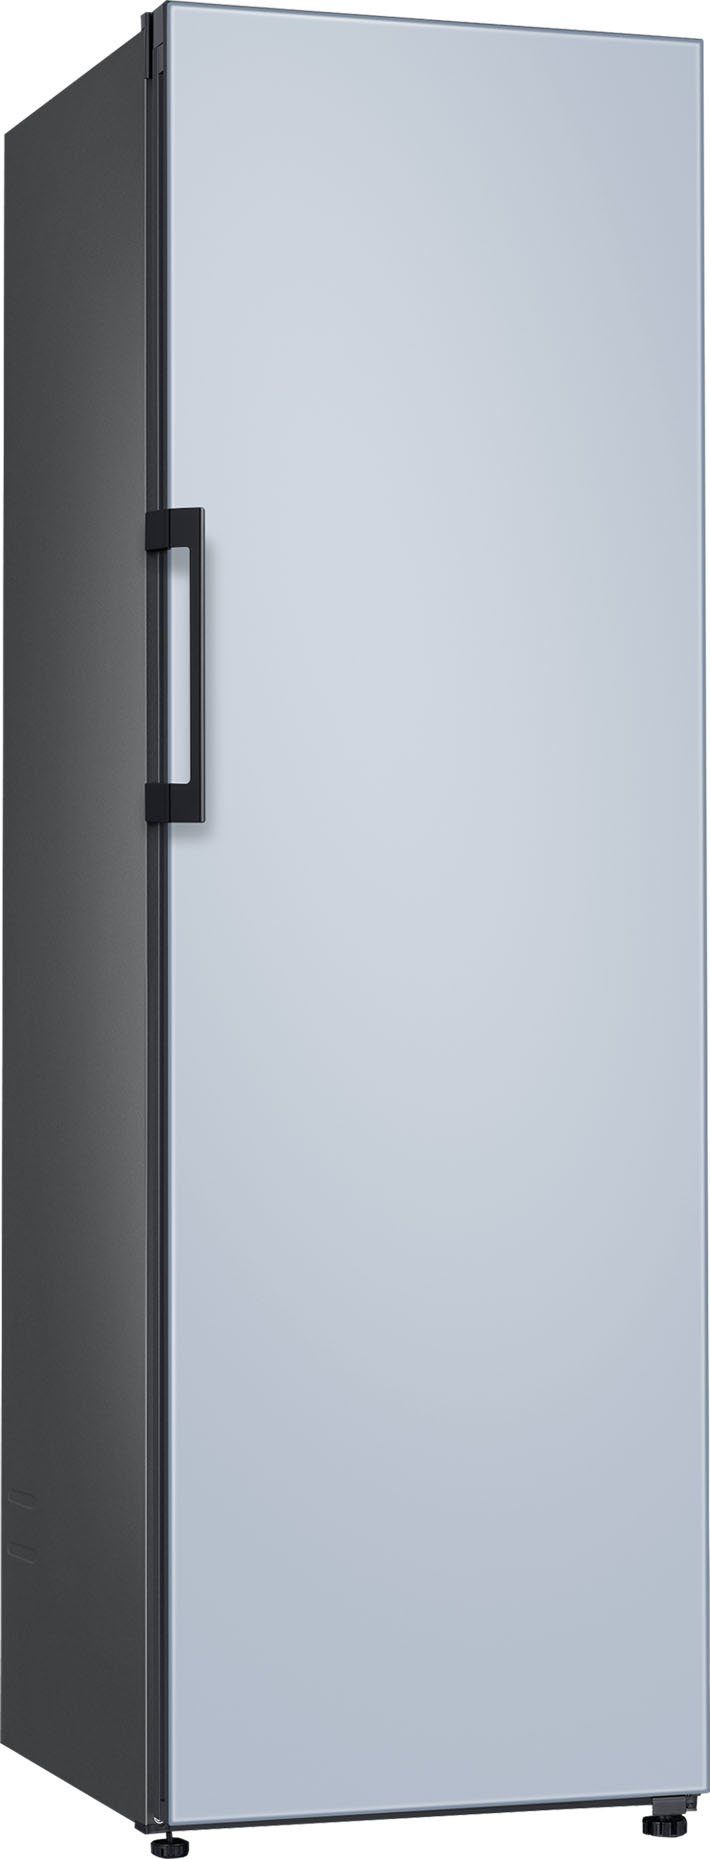 Samsung Kühlschrank Bespoke cm breit cm 185,3 hoch, RR39A746348, 59,5